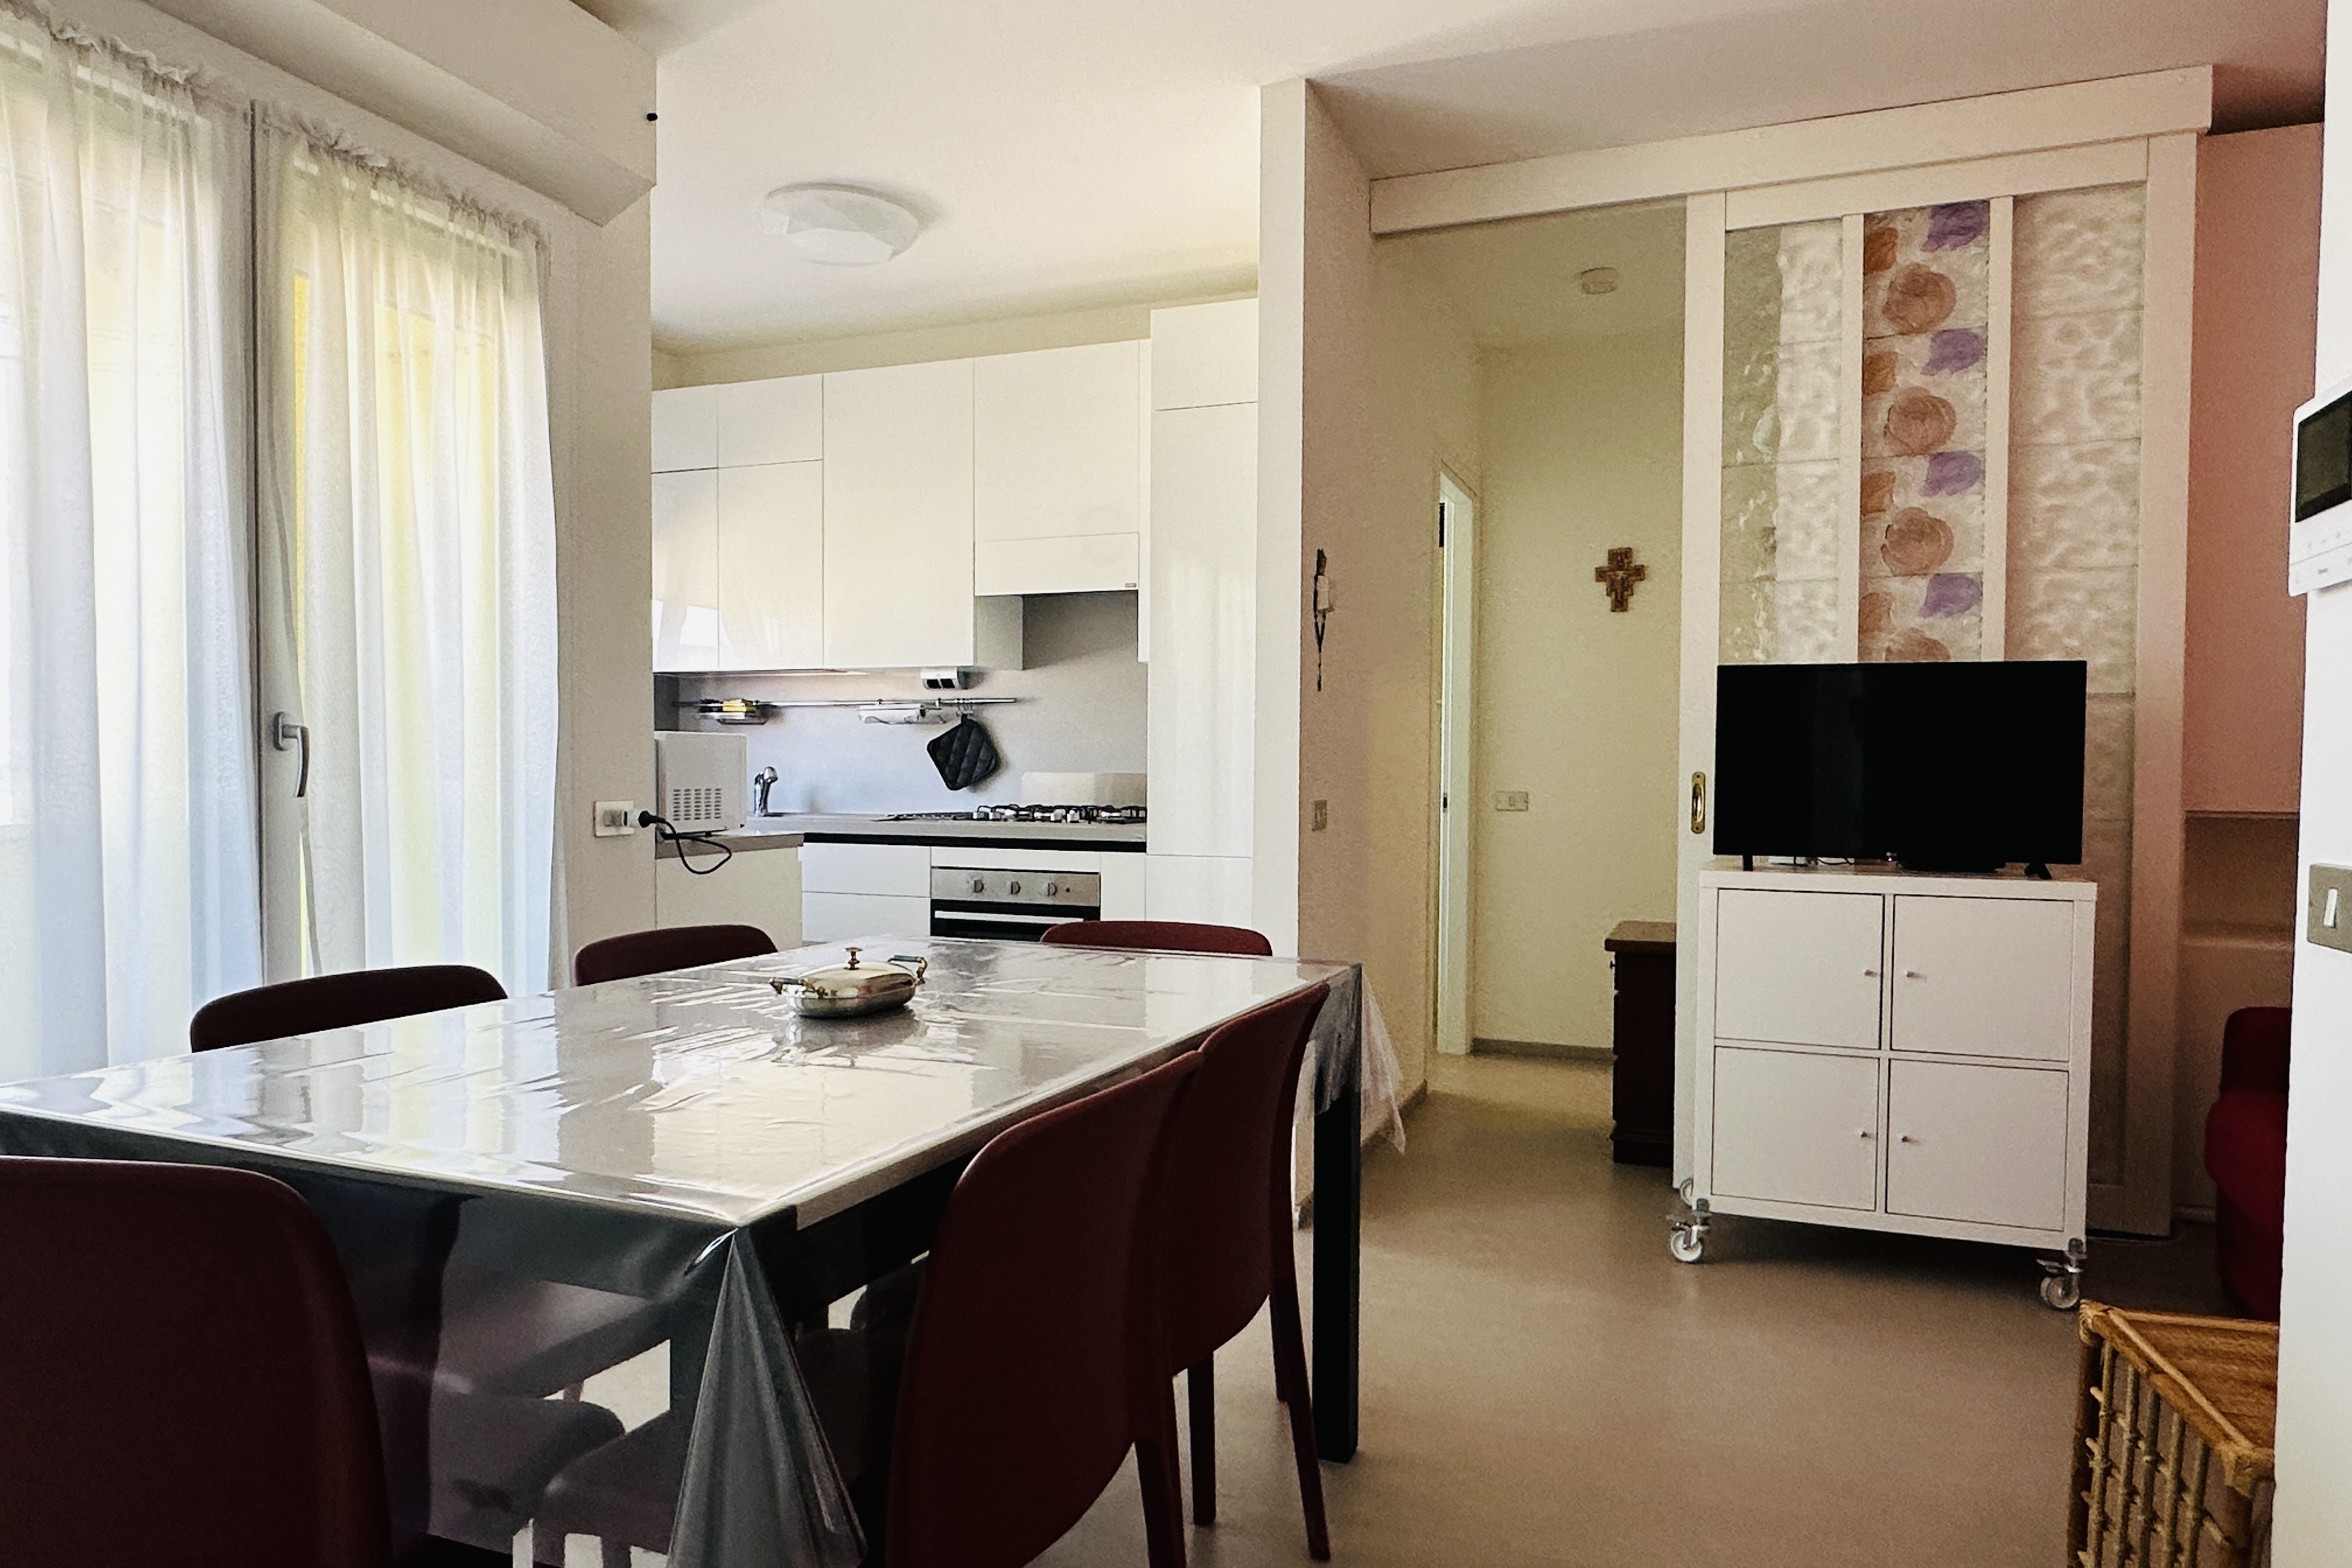 Vendita gradevole appartamento Pesaro - Zona mare (AP839)